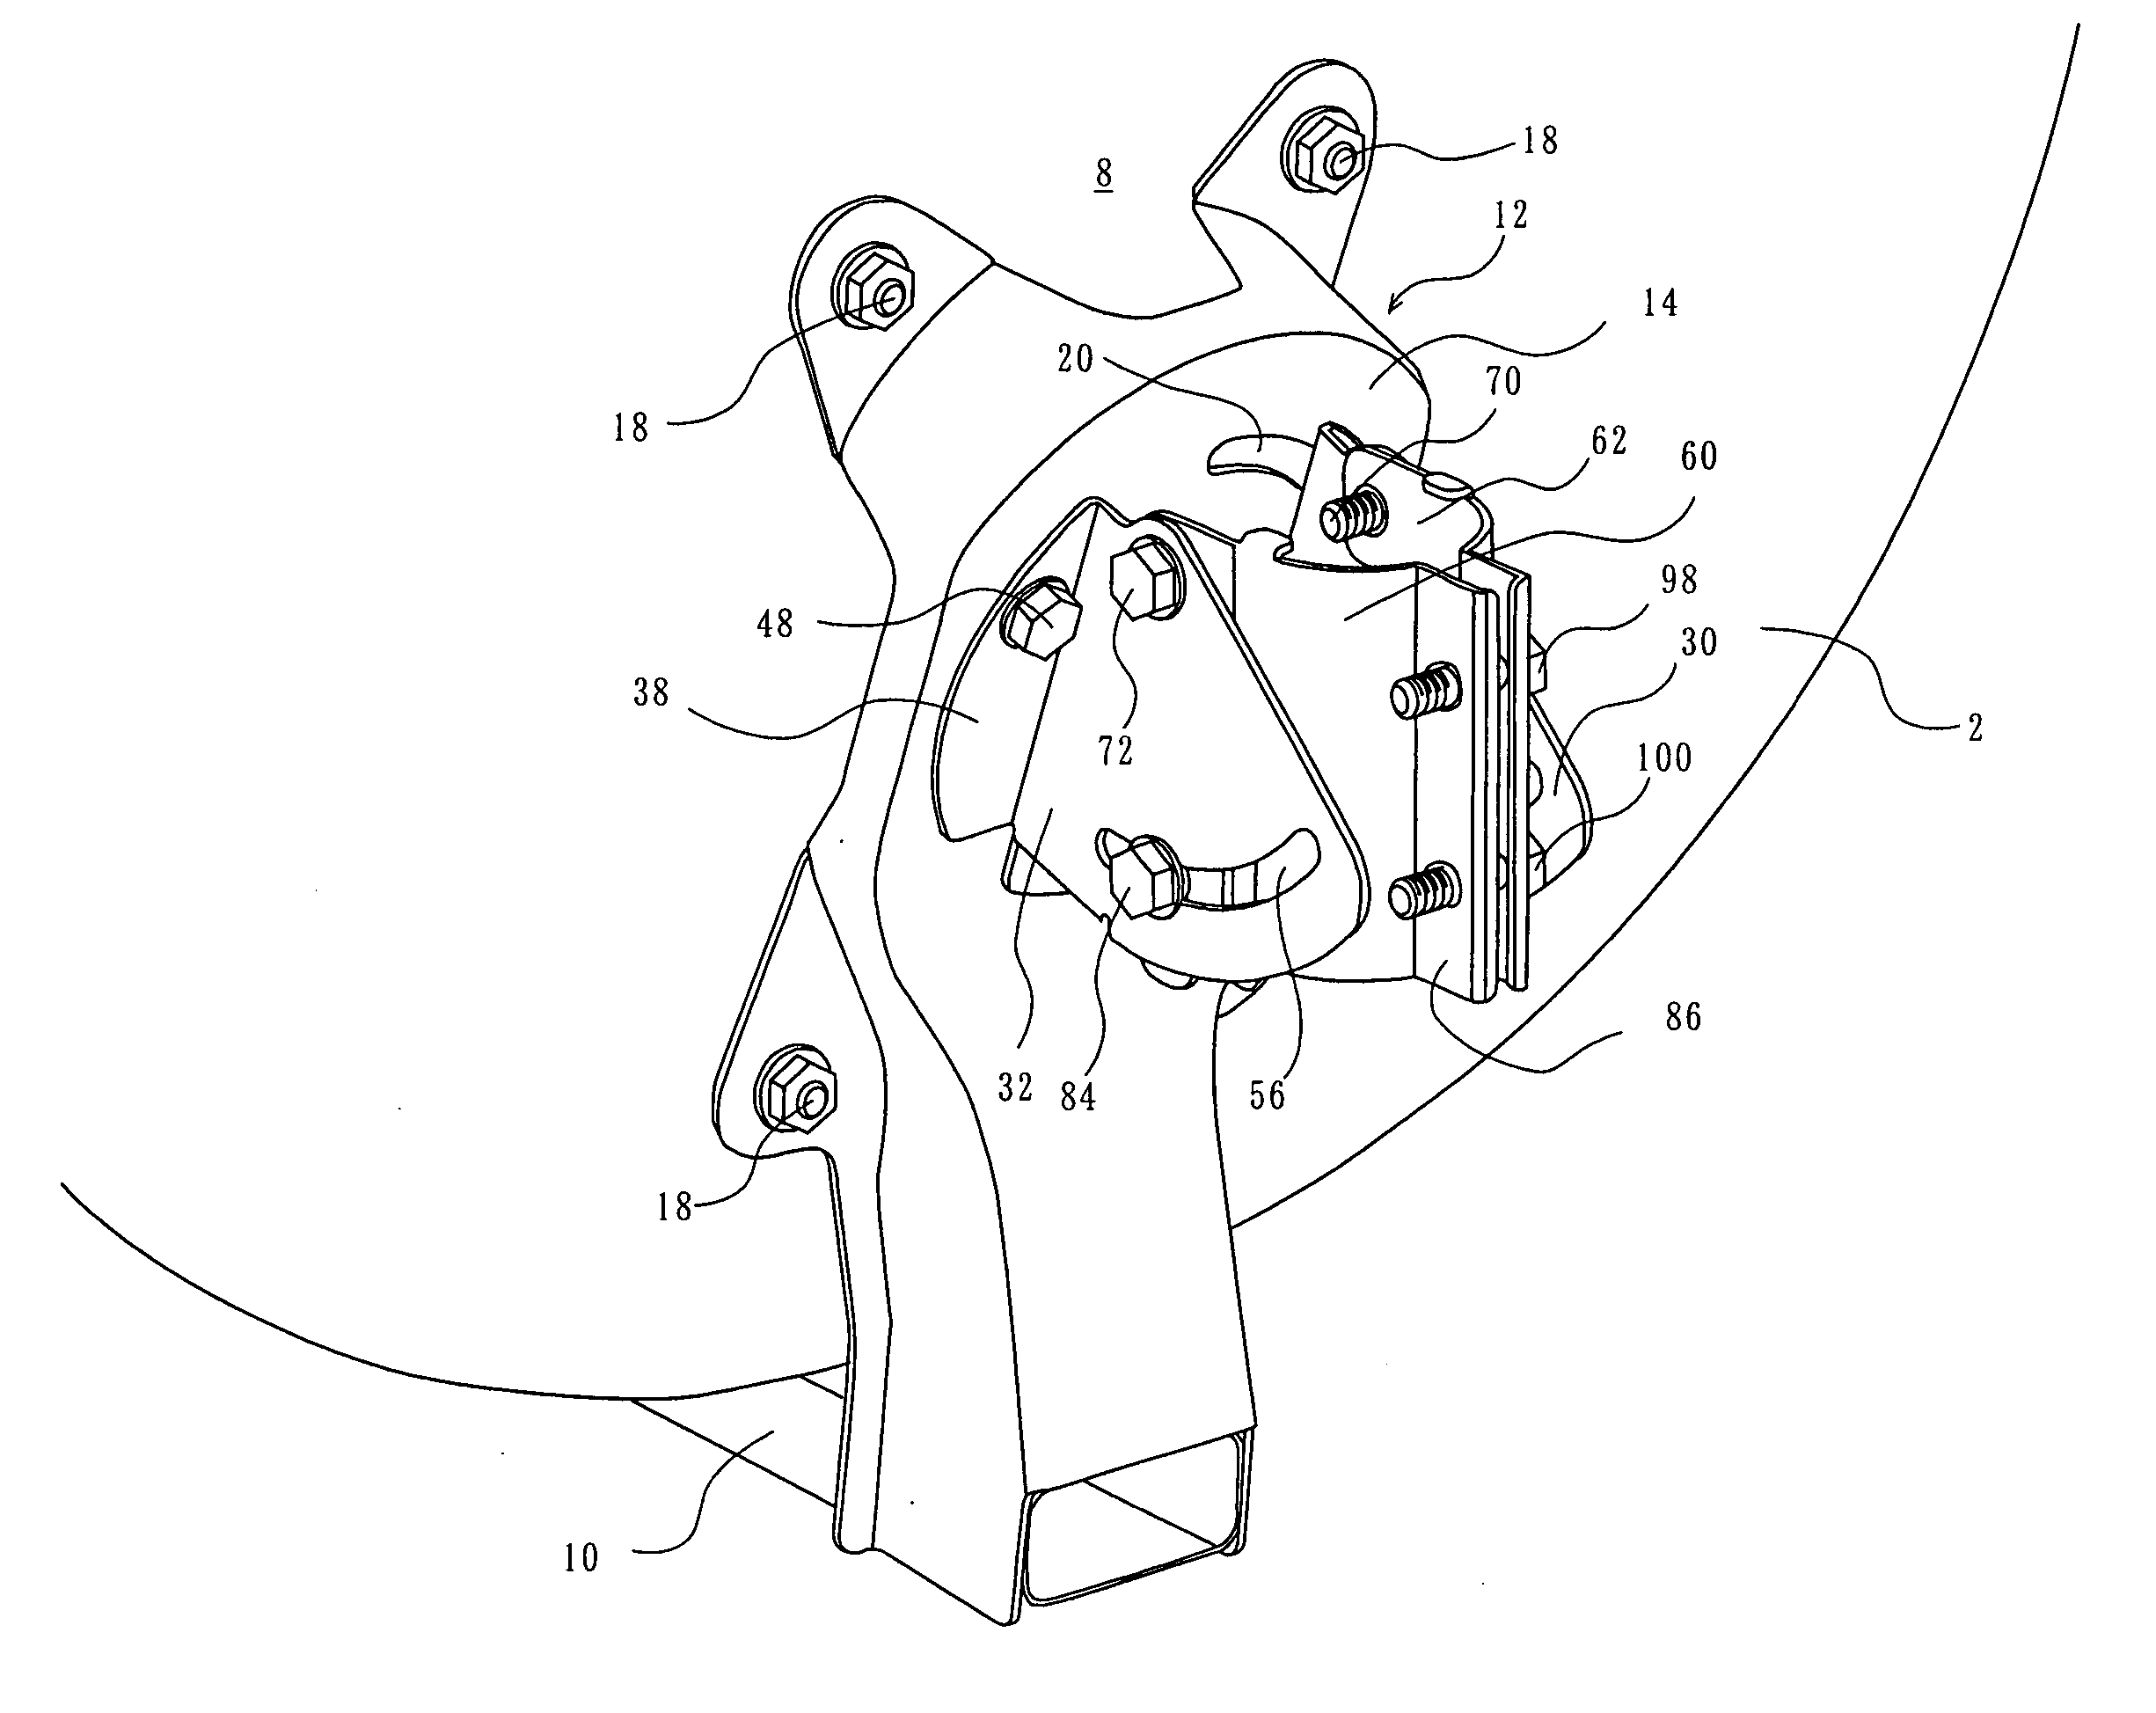 Dish antenna rotation apparatus